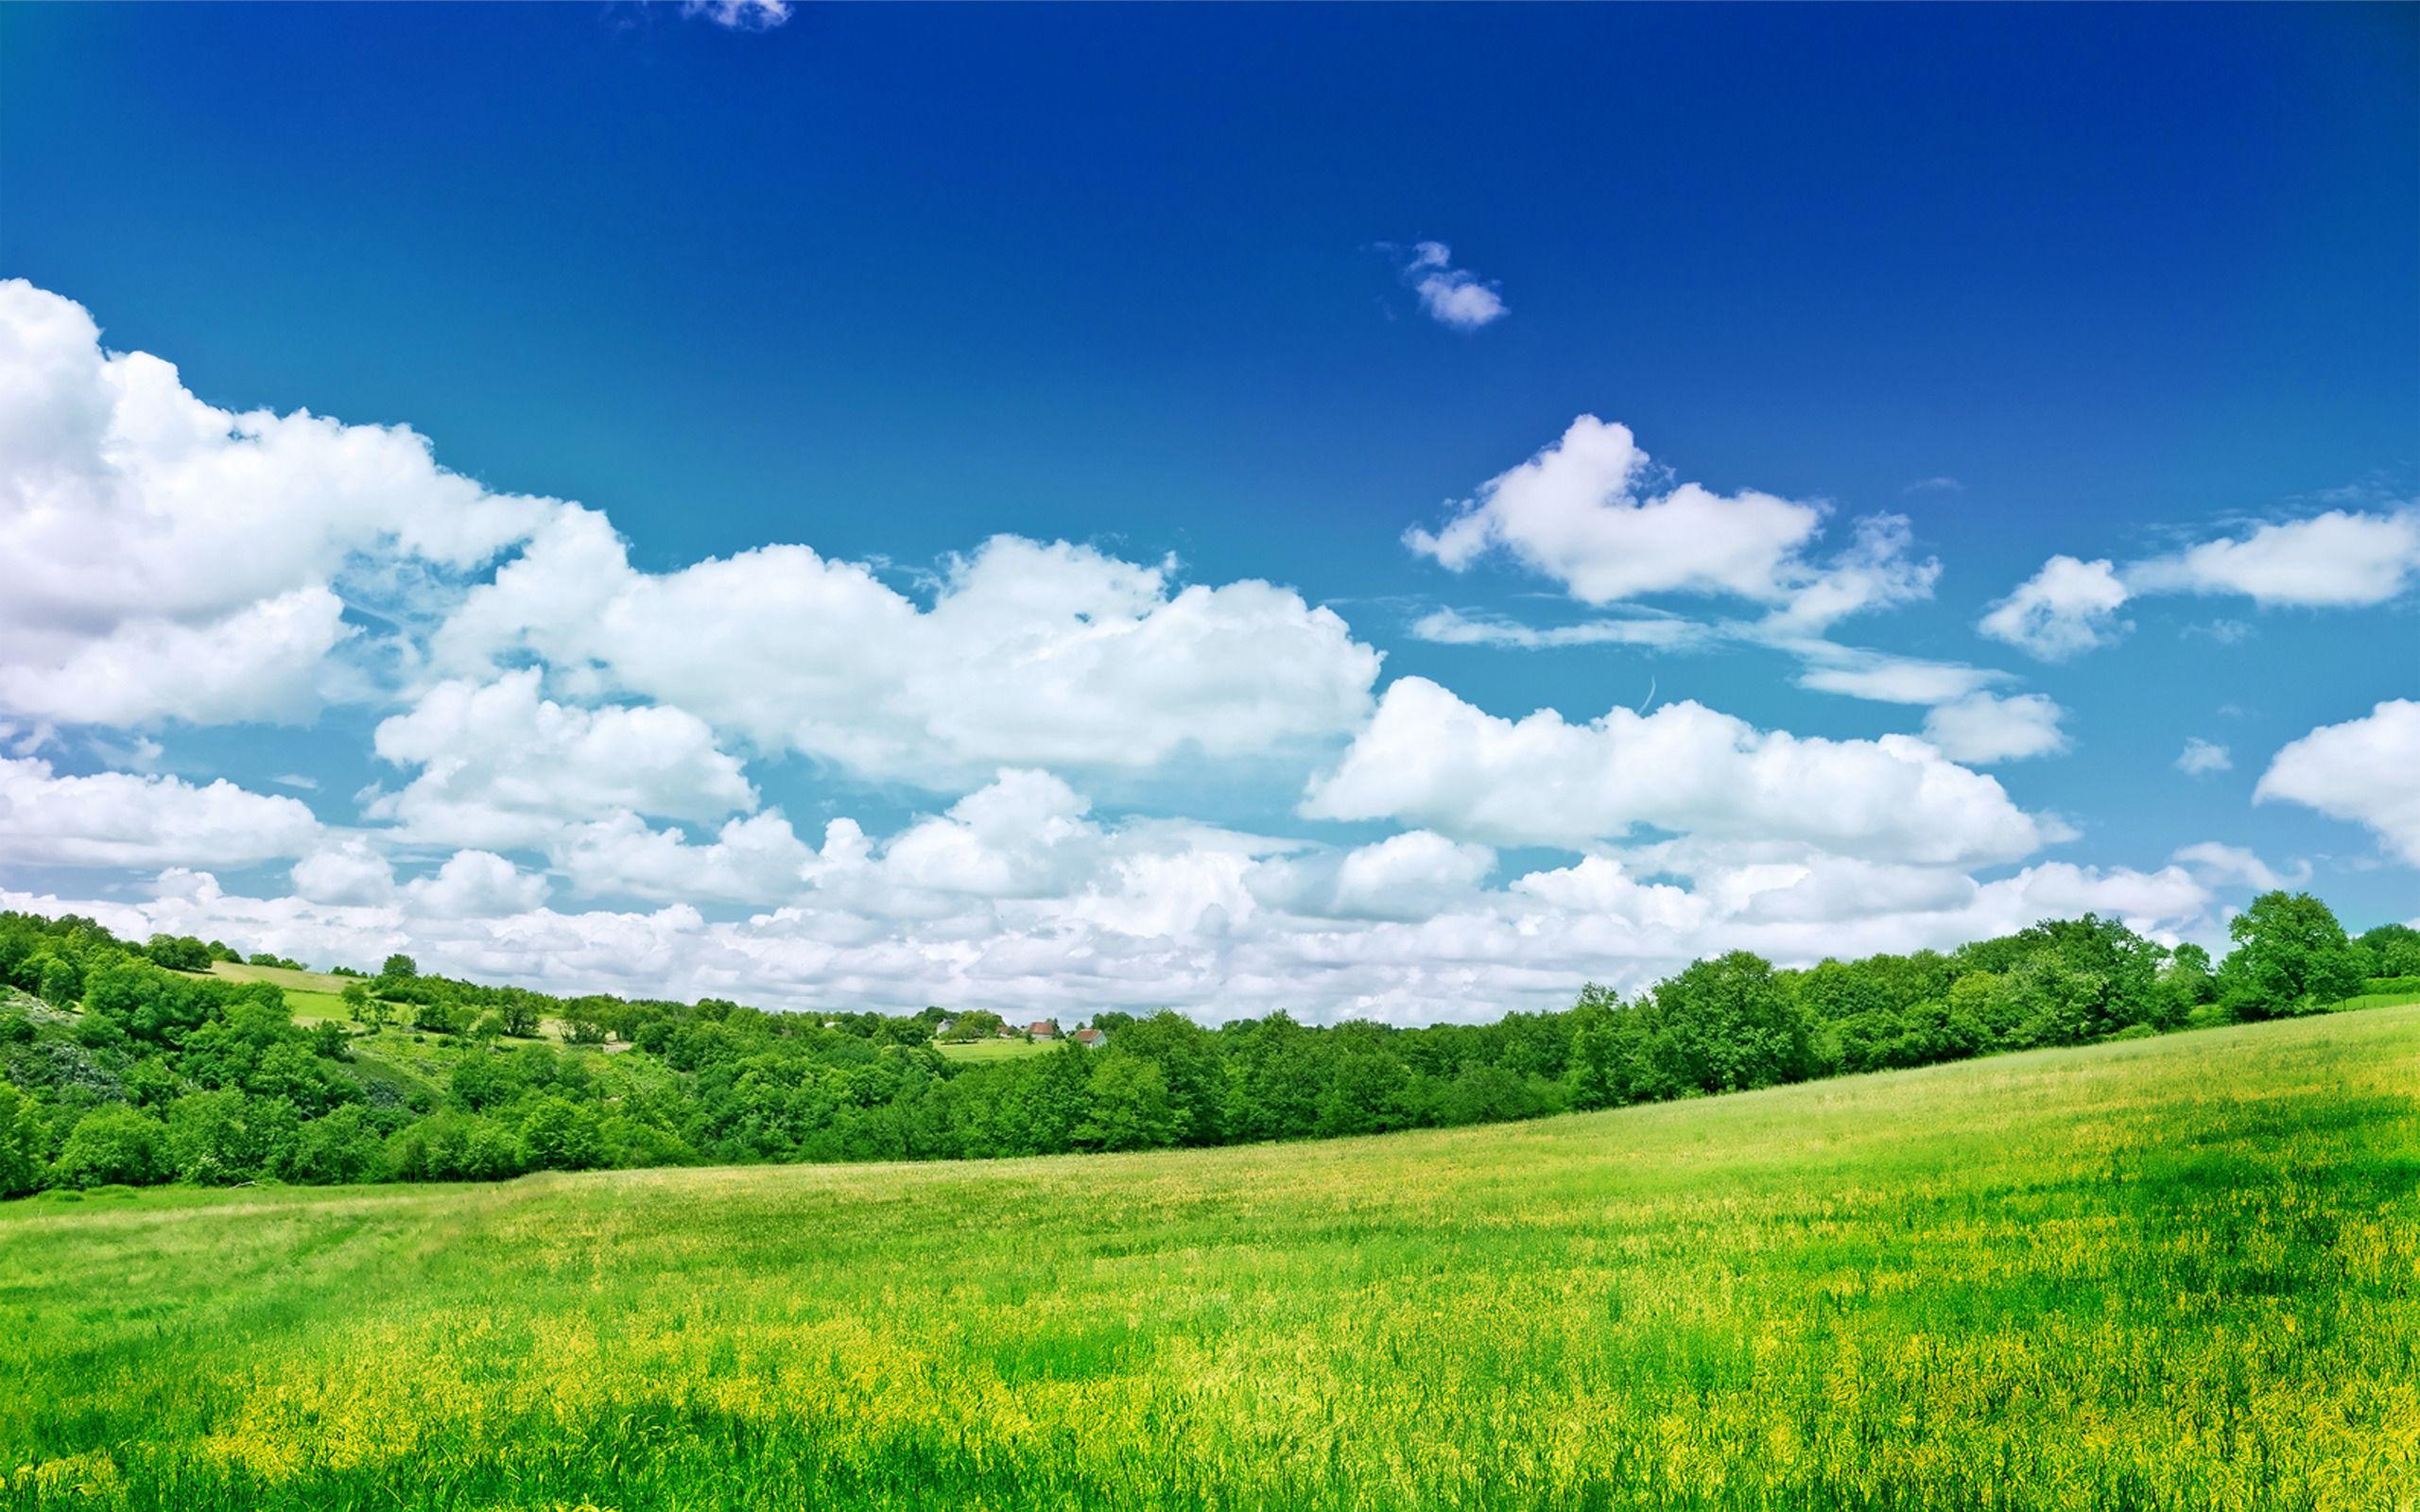 Field Sky Wallpapers - Top Free Field Sky Backgrounds - WallpaperAccess